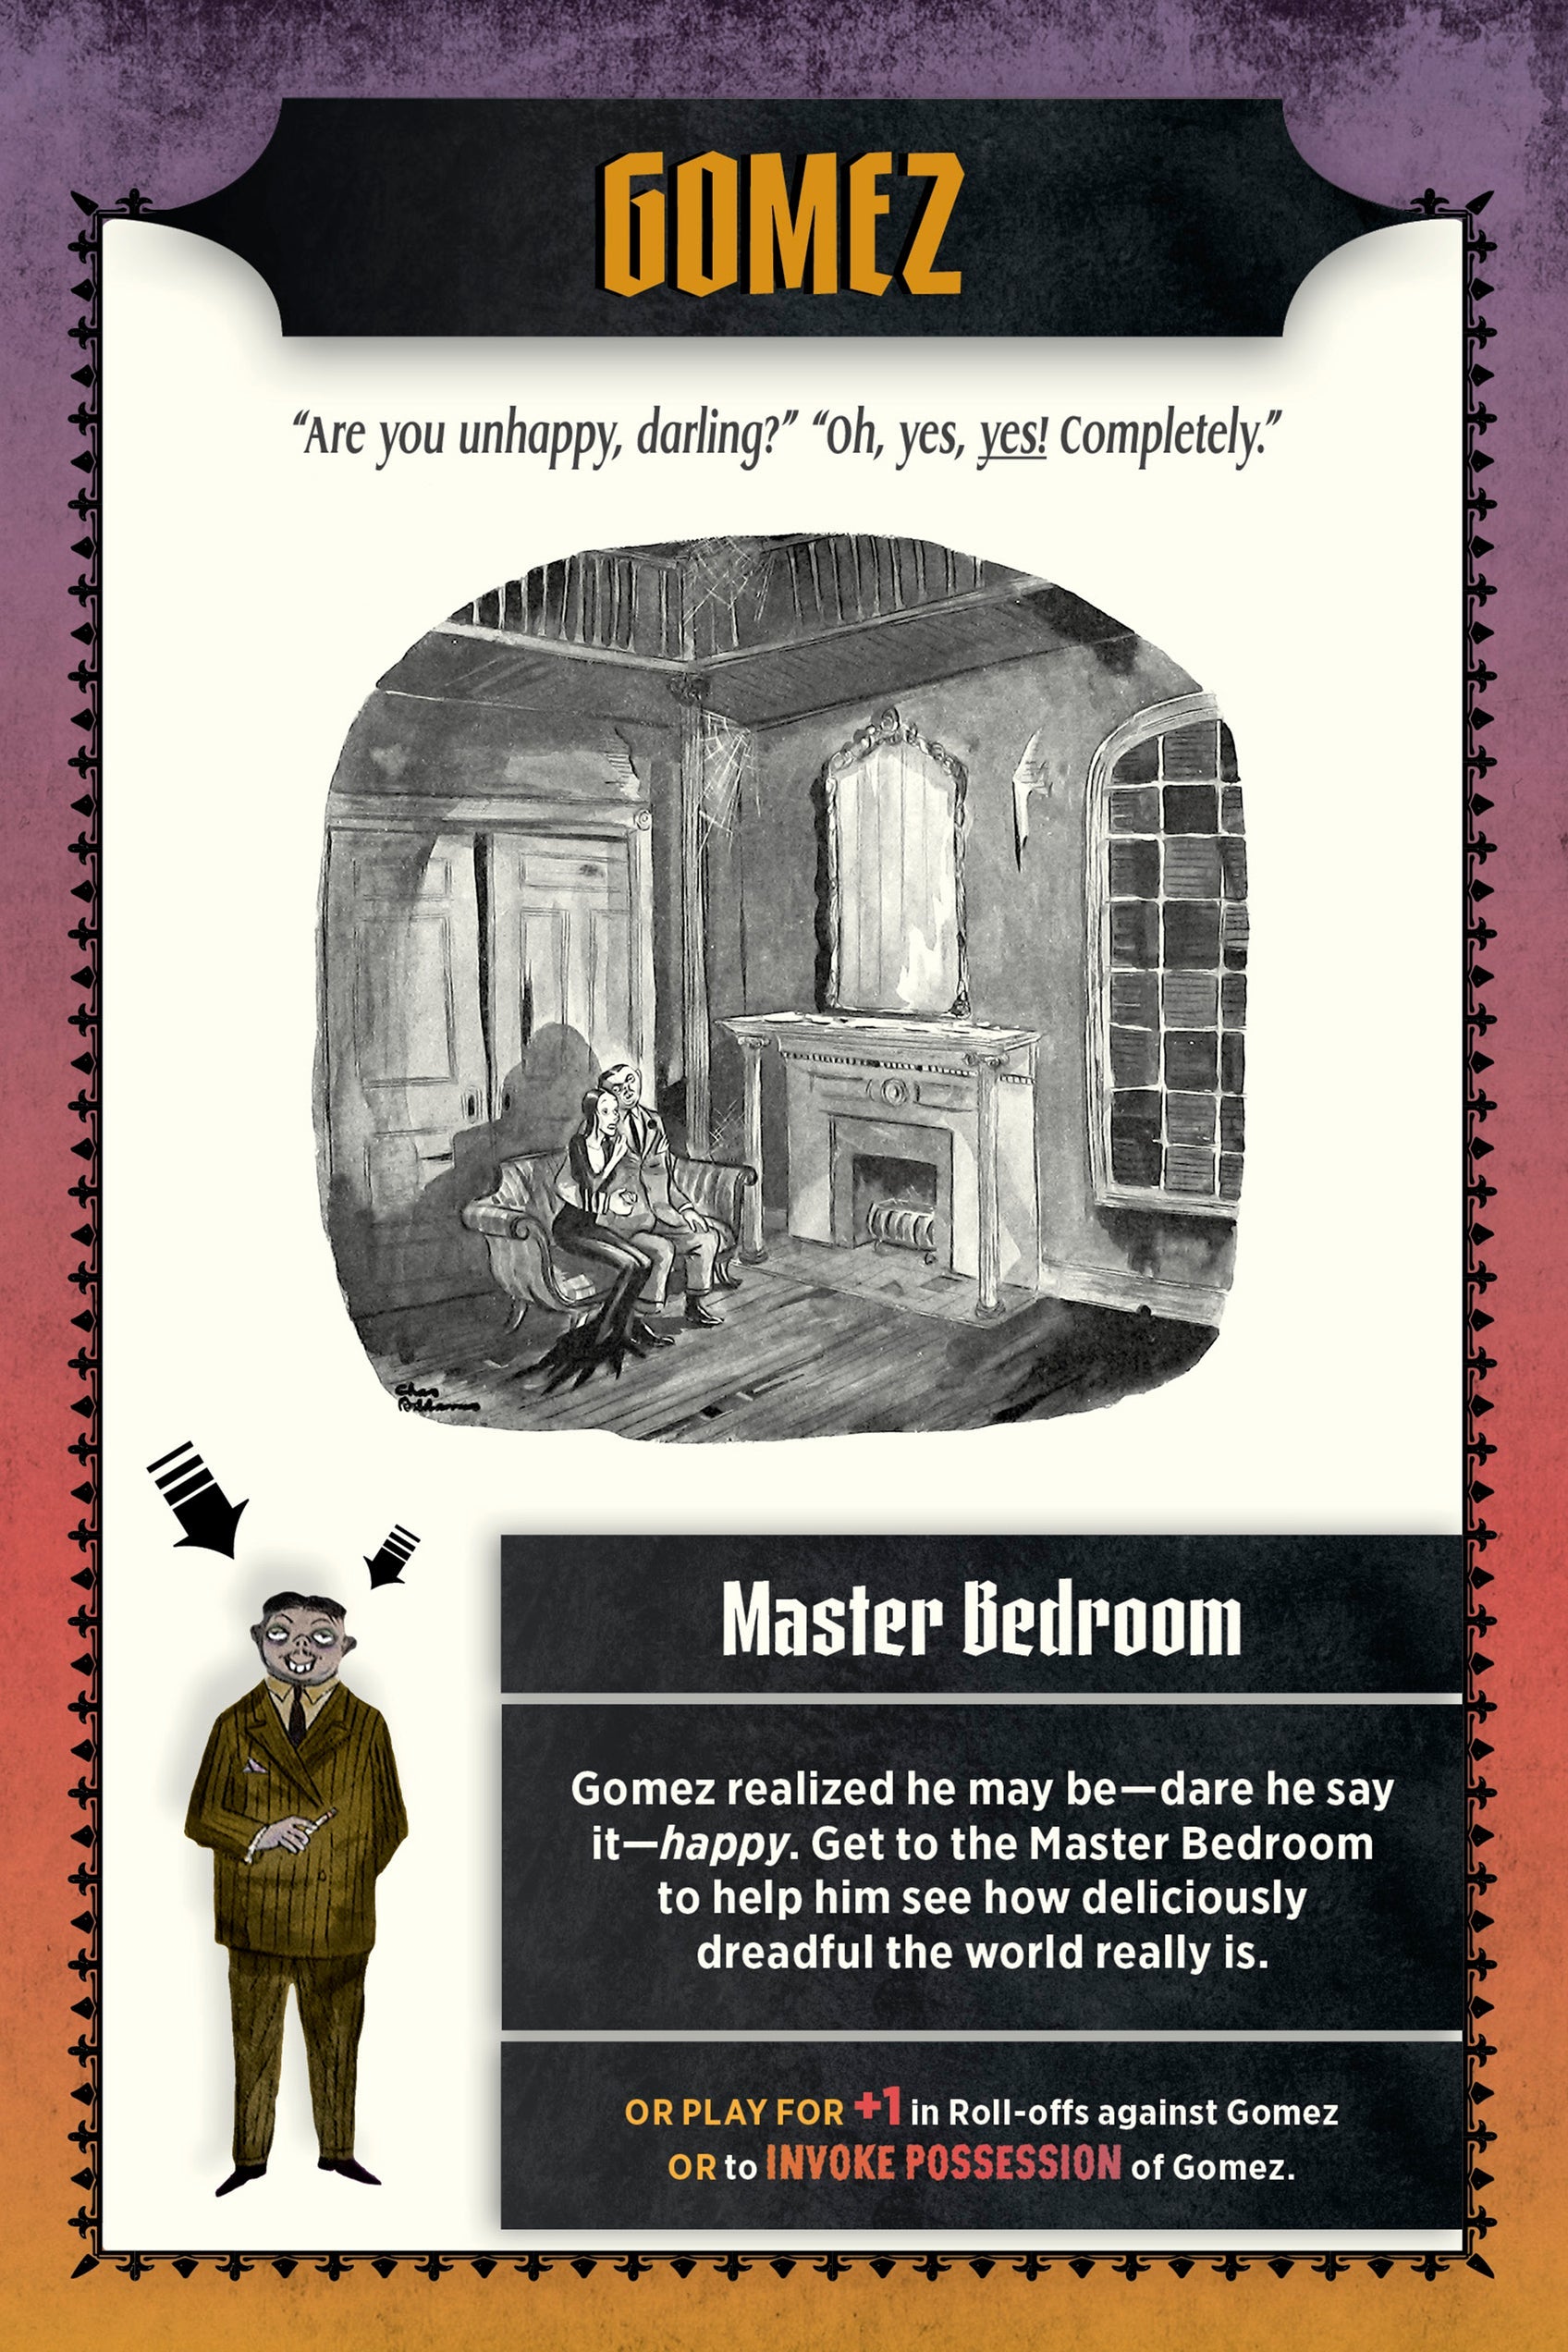 Rental - The Addams Family: A Delightfully Frightful Creepy Board Game